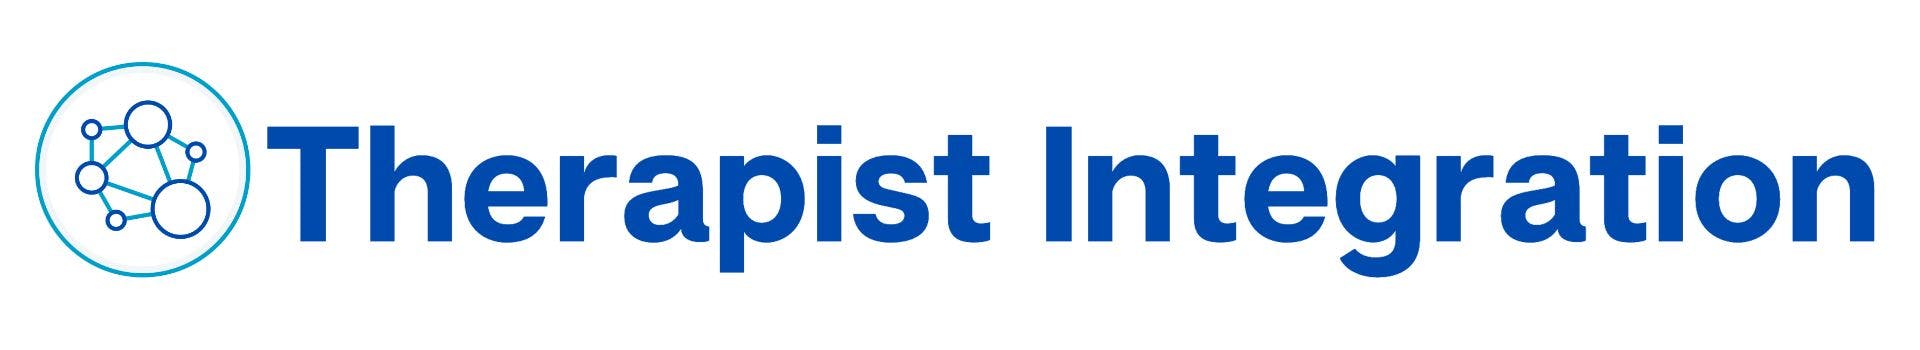 Therapist Integration logo